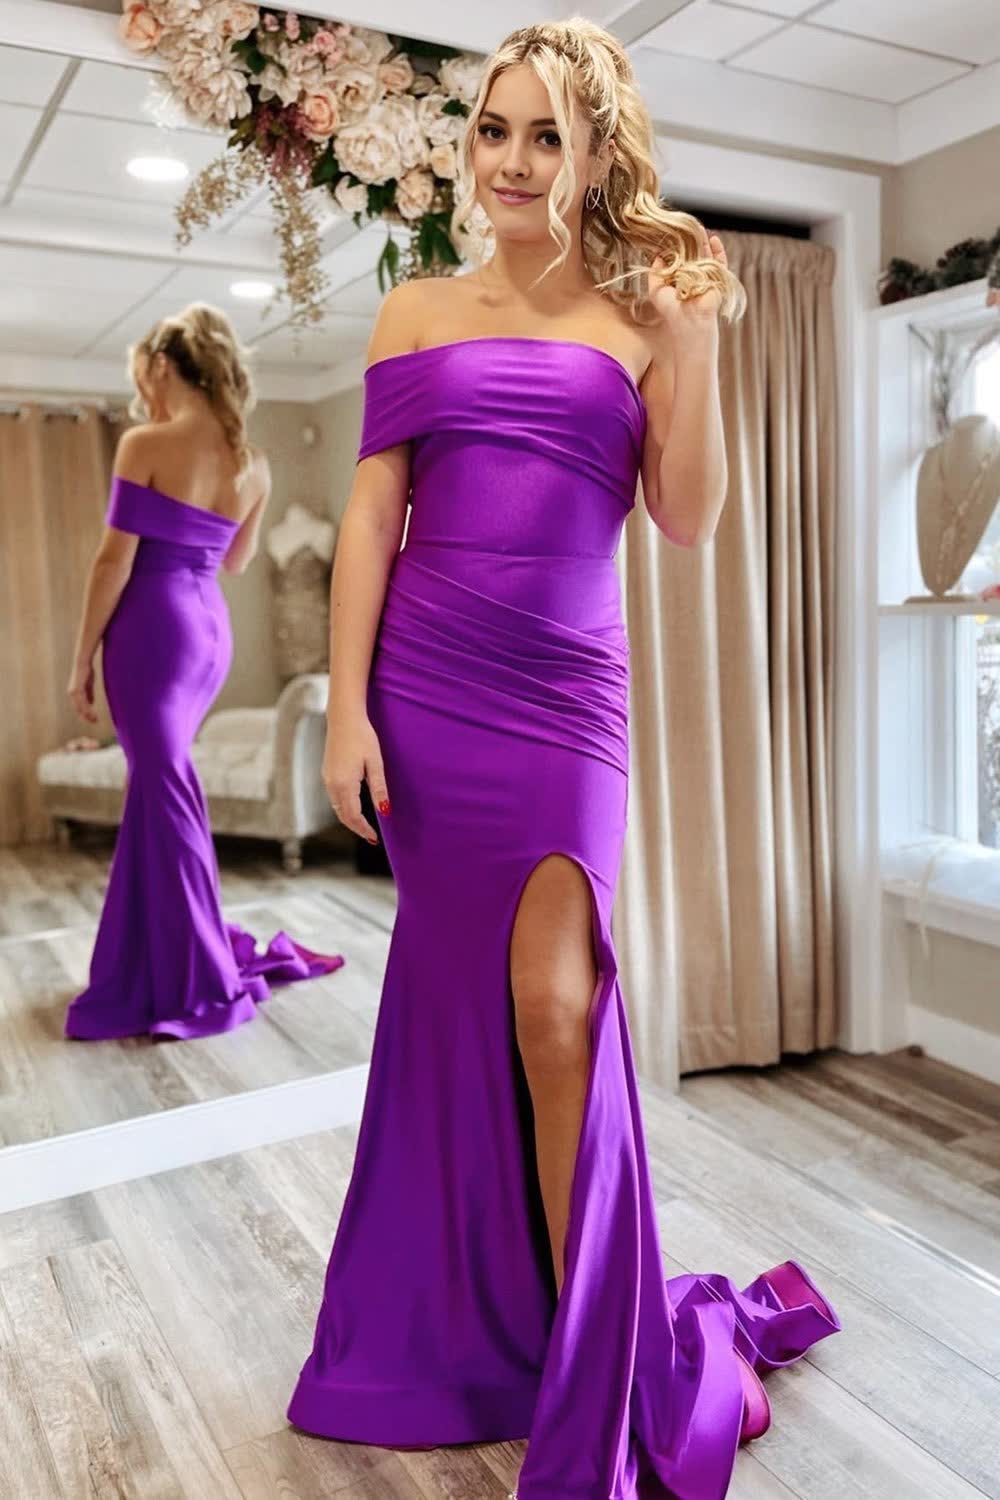 Purple One Shoulder Mermaid Long Corset Prom Dress outfits, Purple One Shoulder Mermaid Long Prom Dress